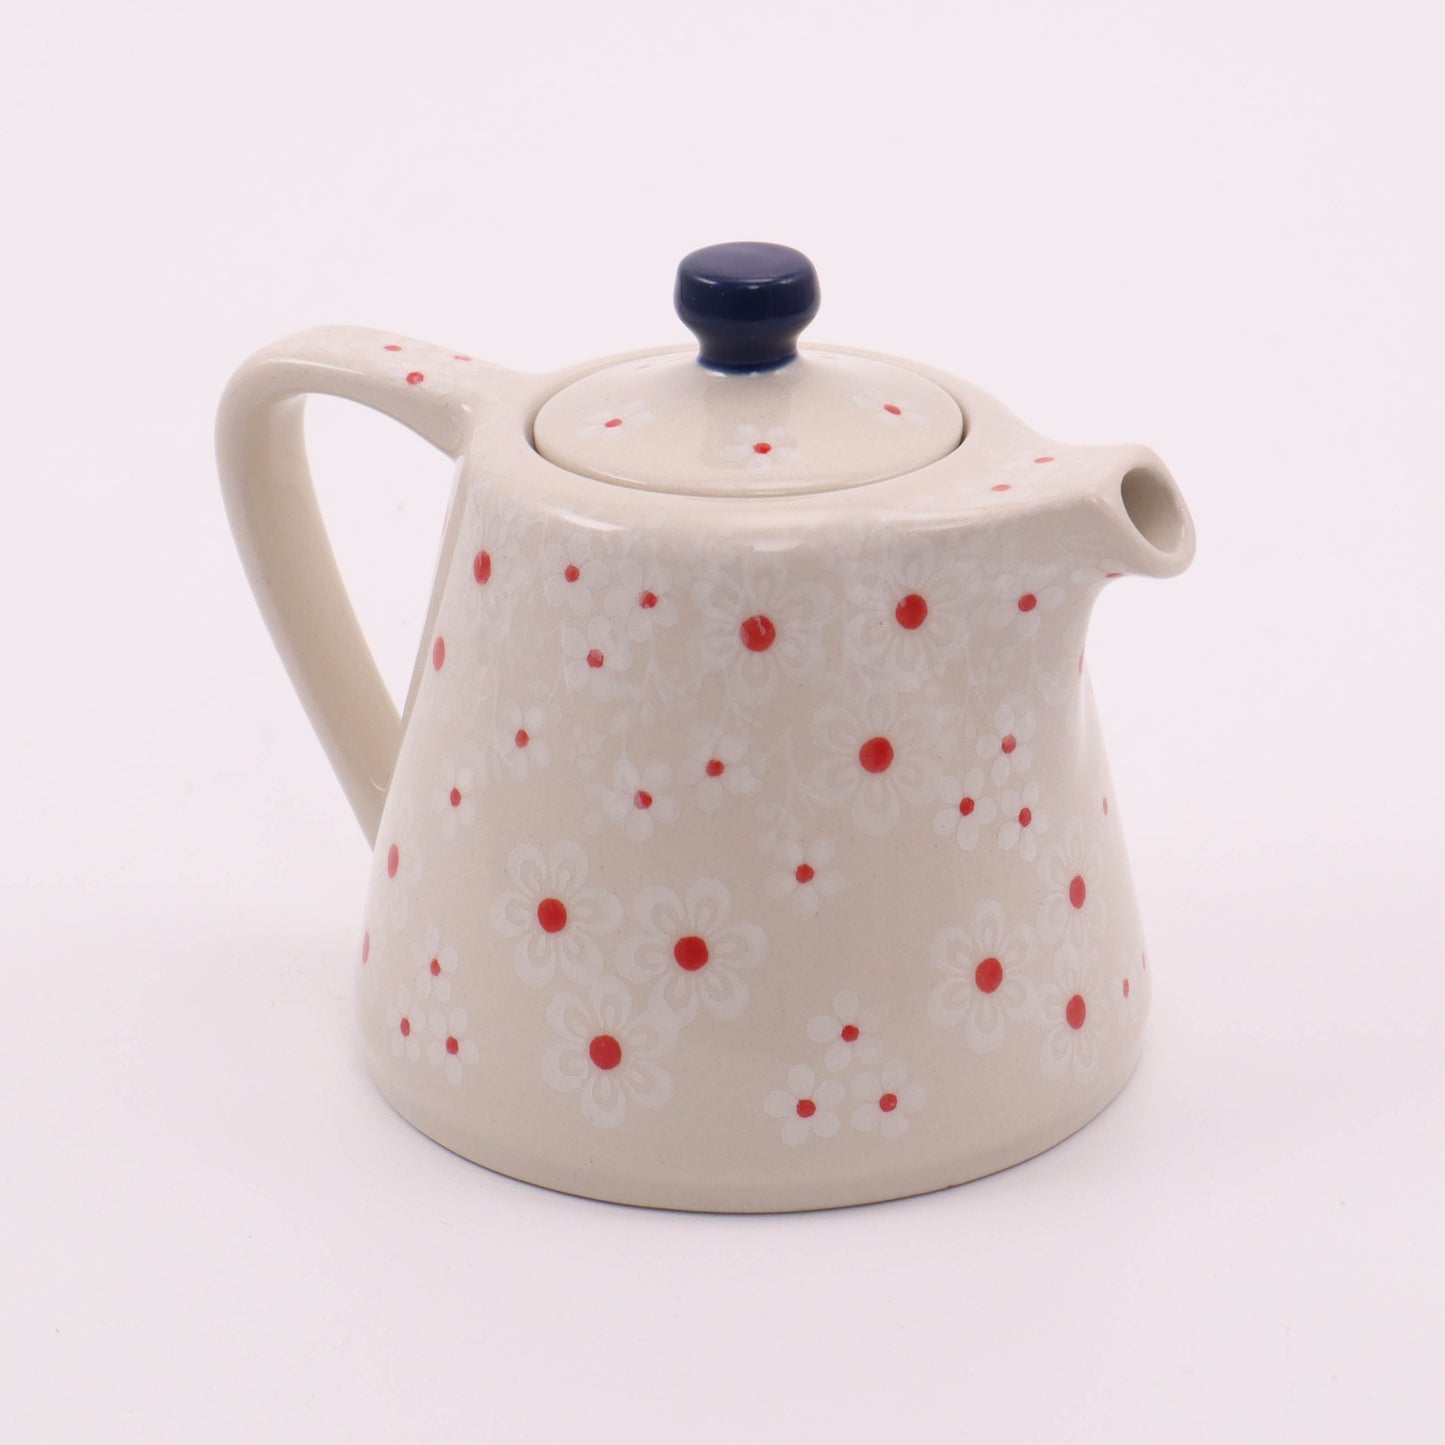 8oz Modern Teapot. Pattern: Sugar and Spice